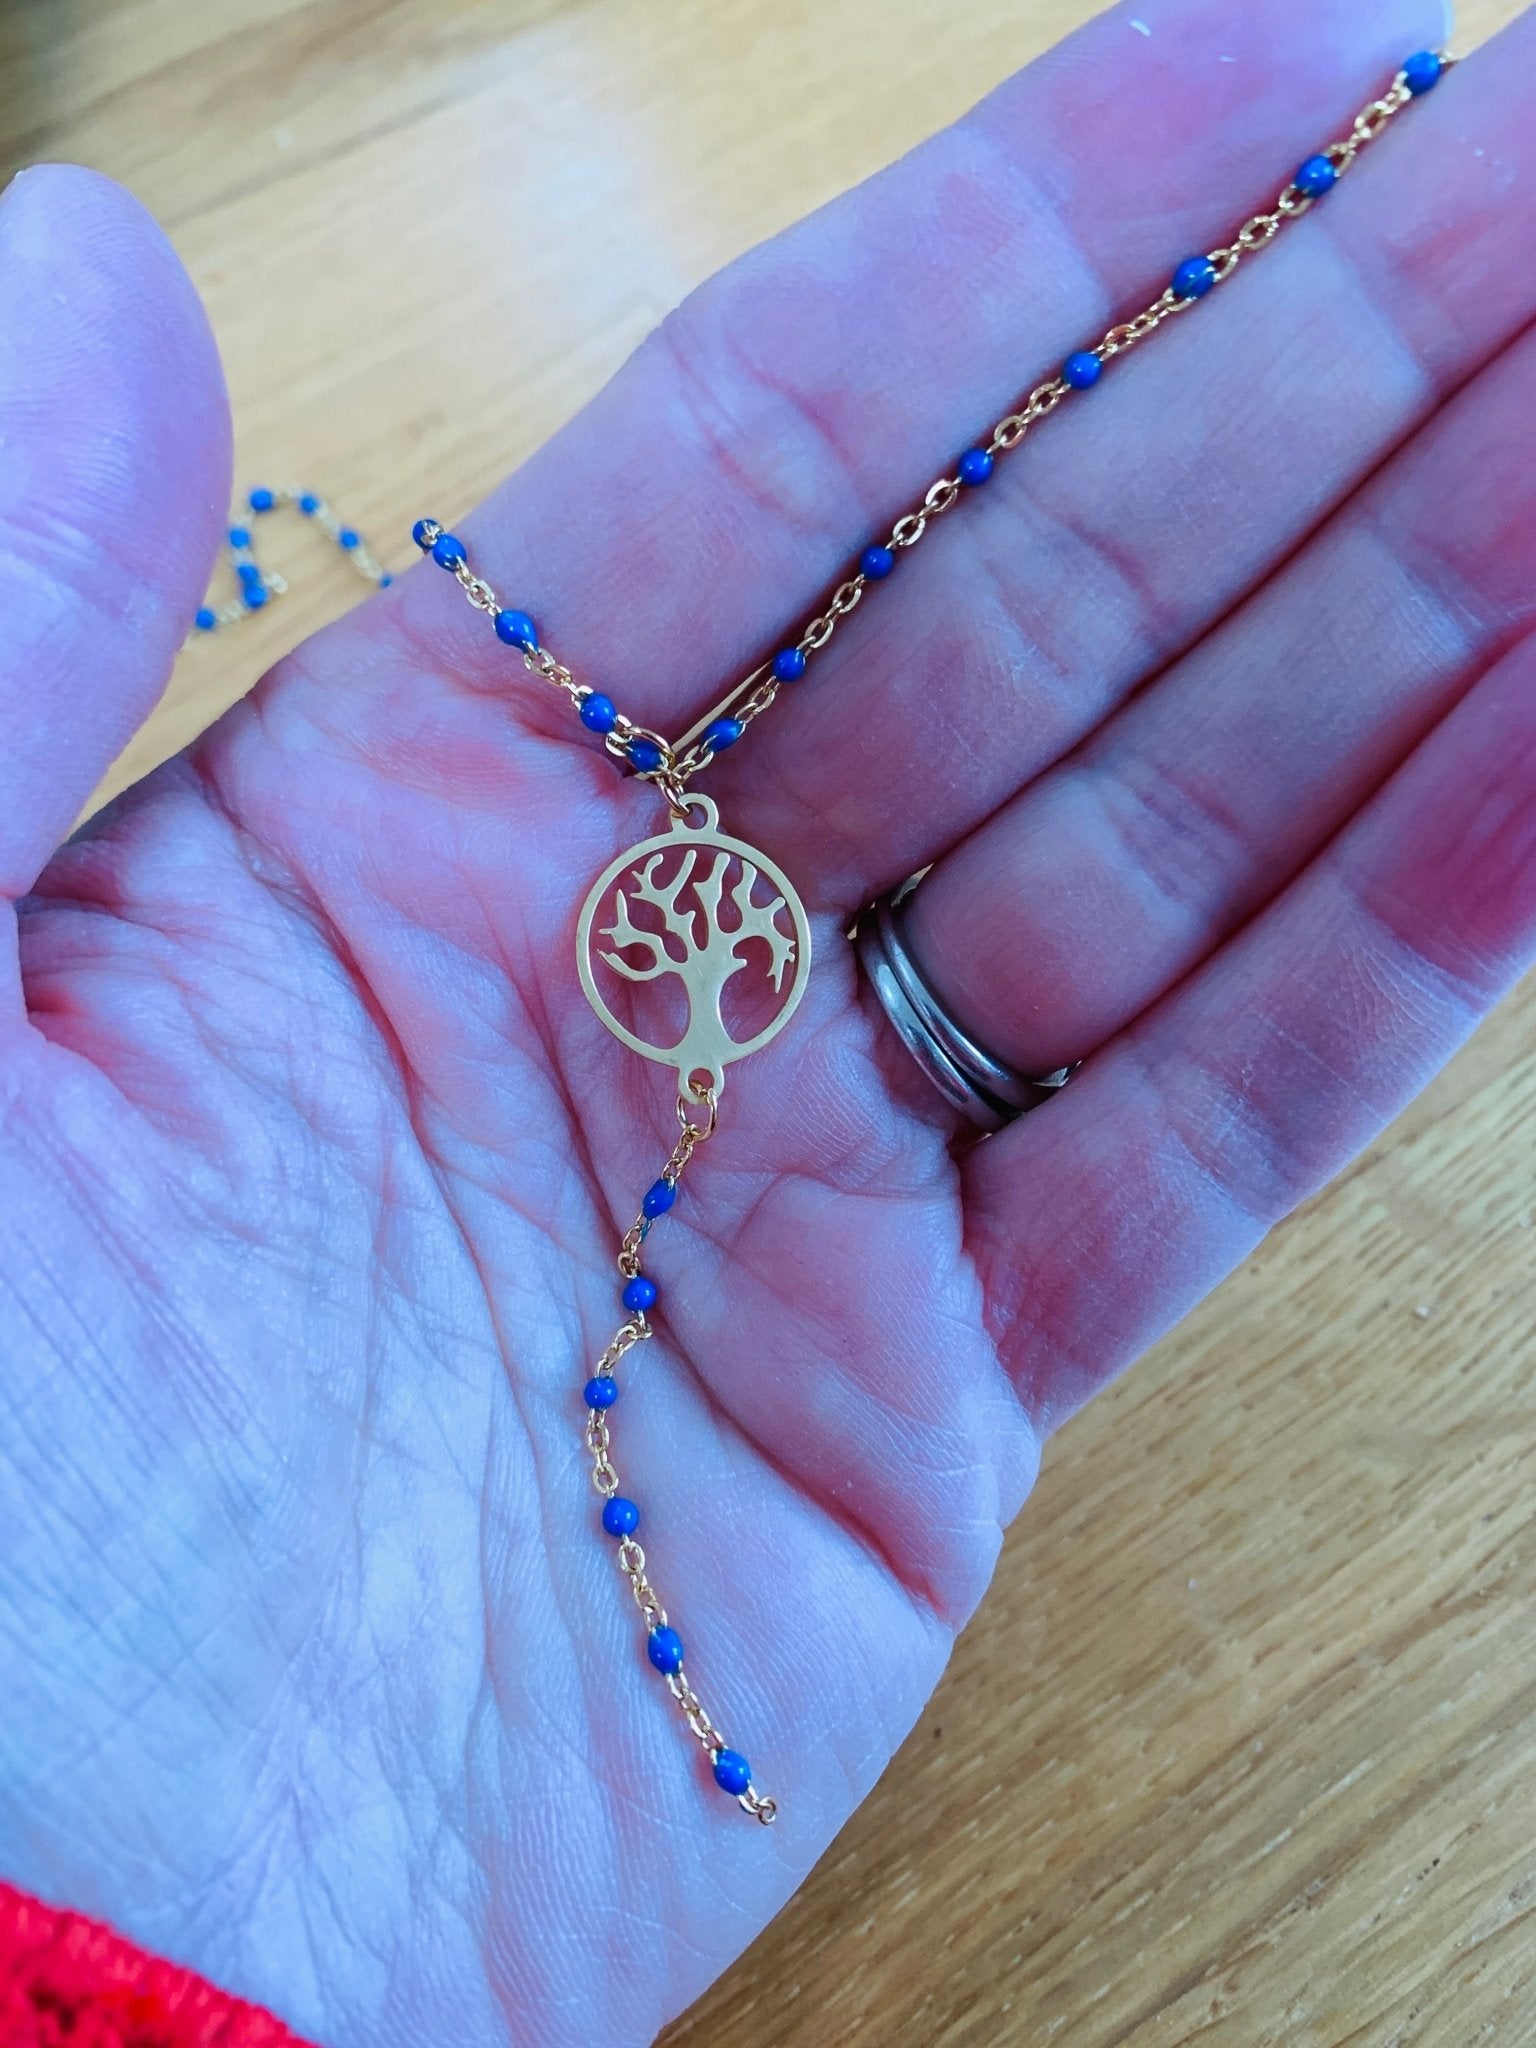 Mulberry tree gold and necklace / bracelet - Natalia Willmott